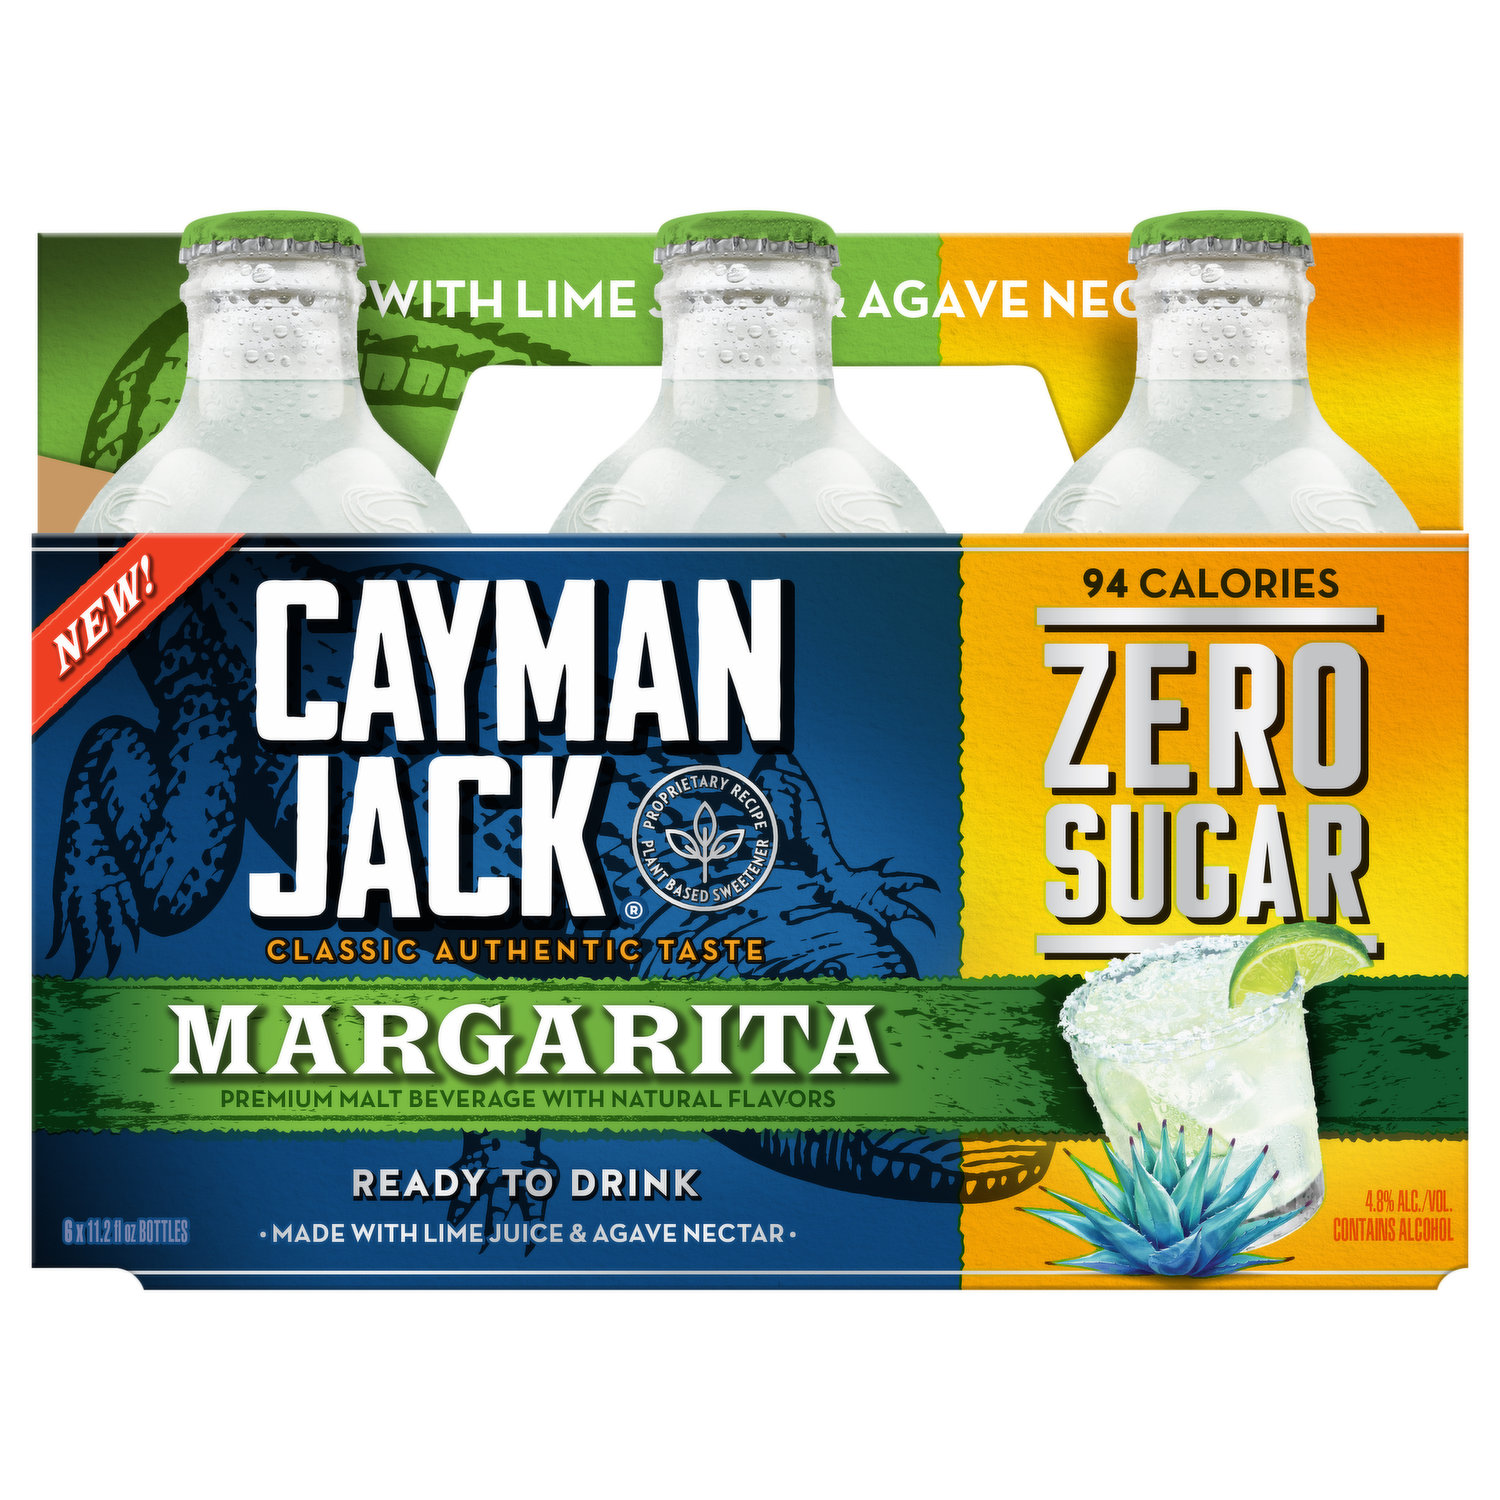 Cayman Jack Calories And Sugar